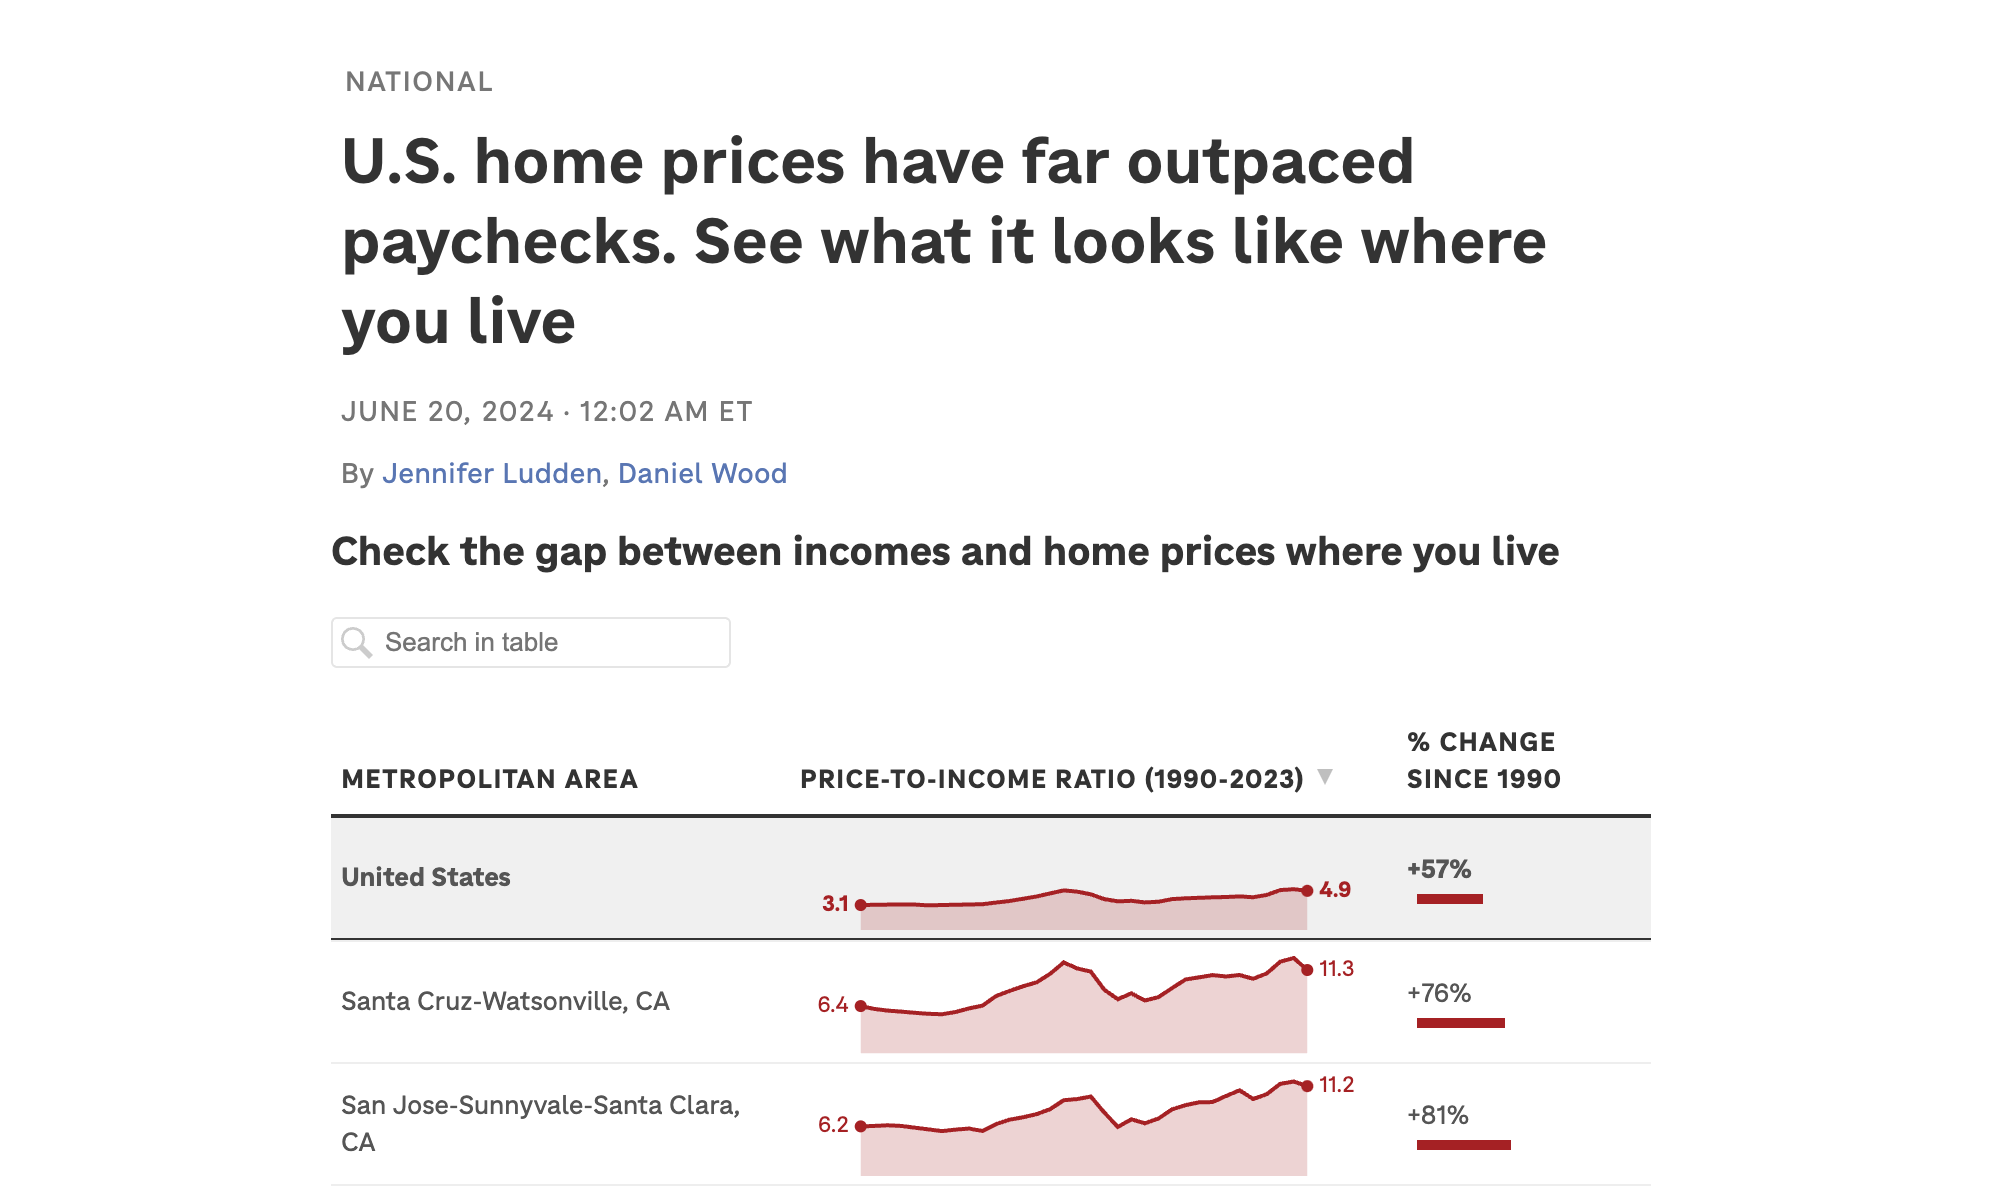 Interactive Income/Home Price Gap on NPR